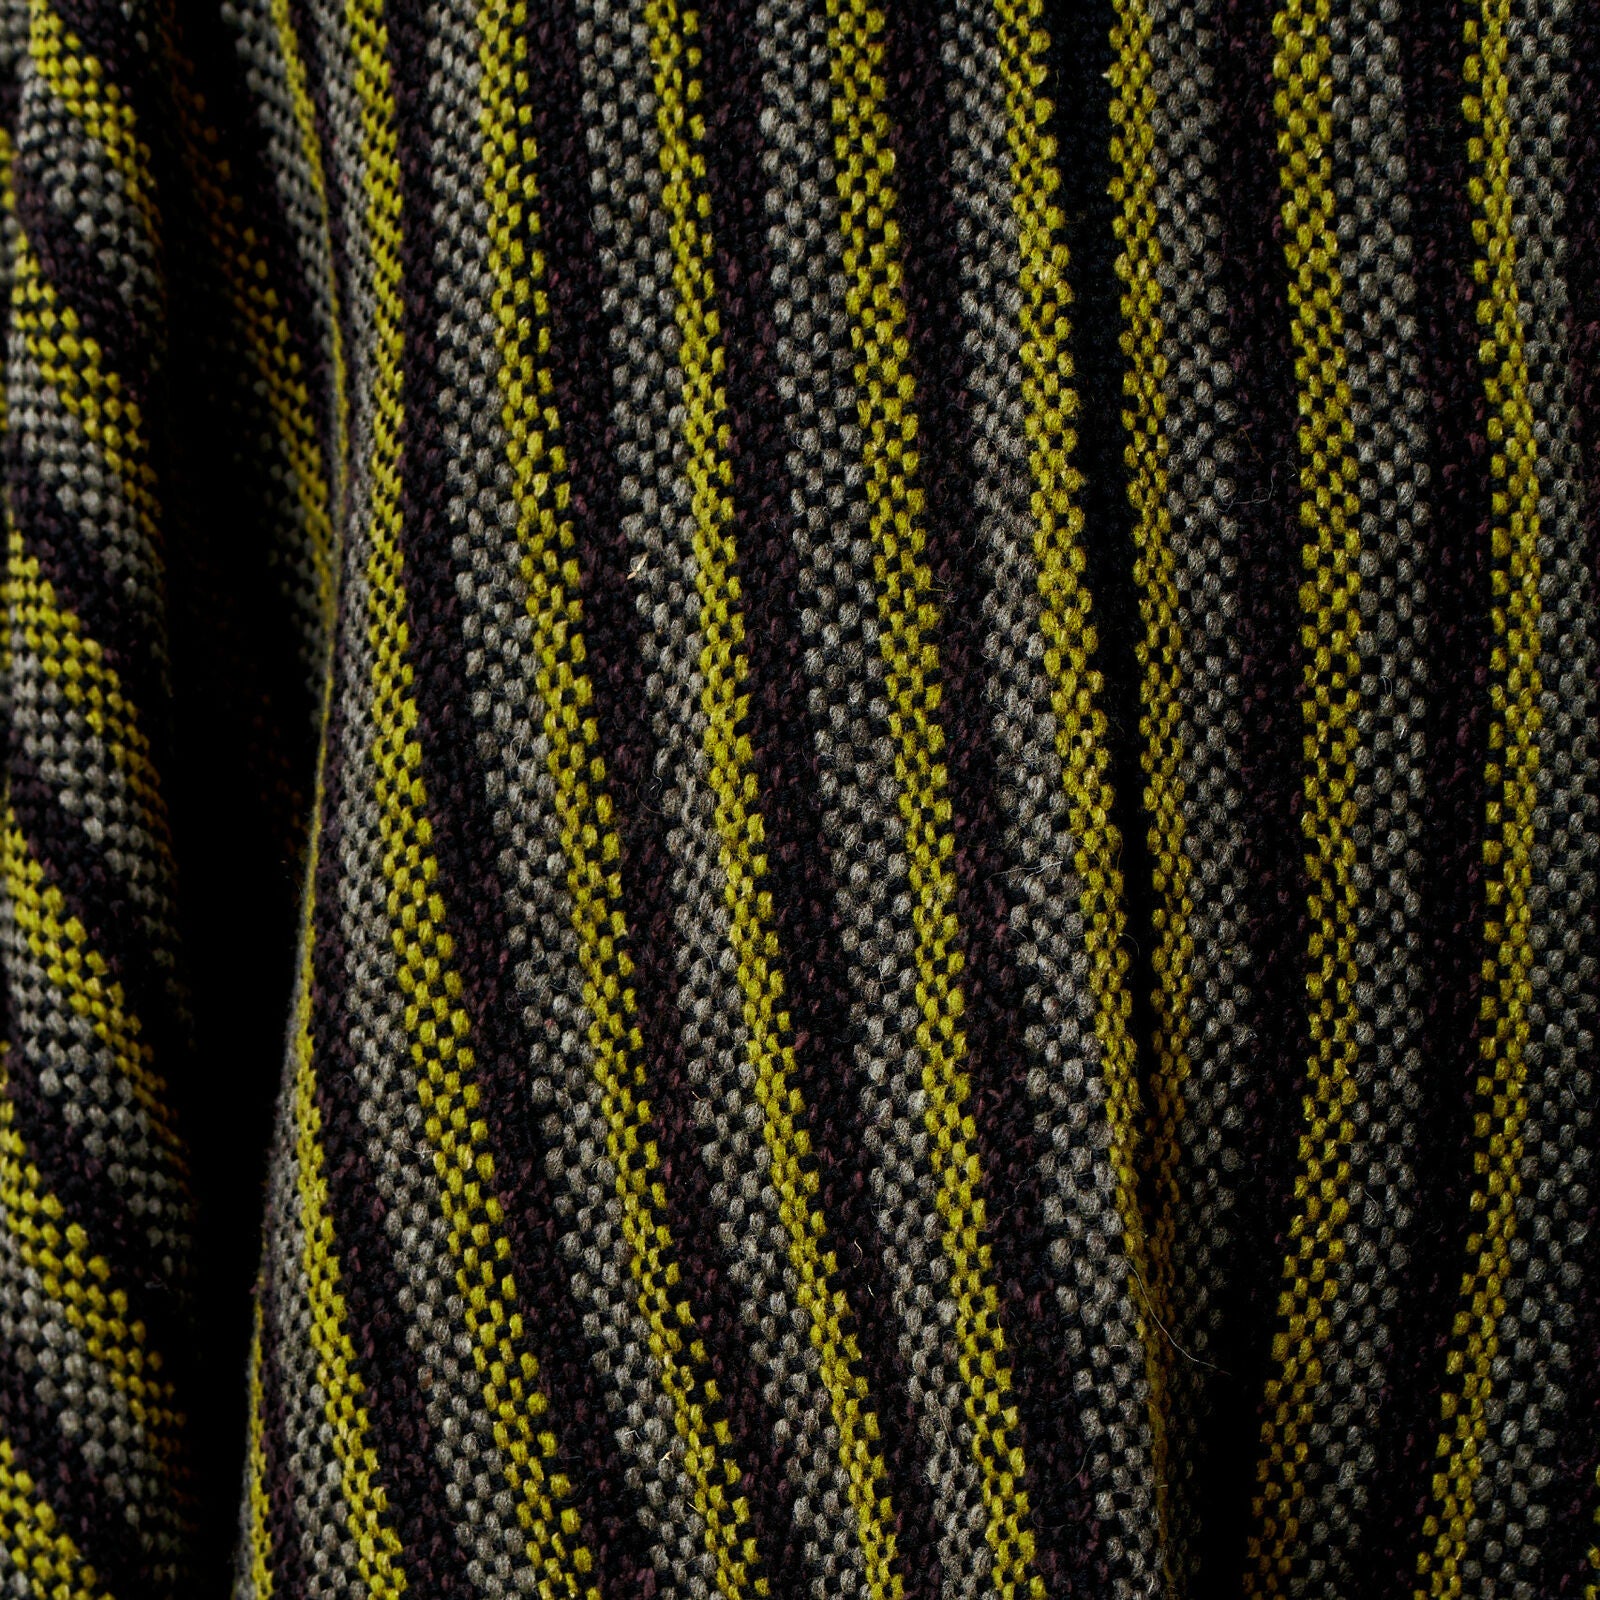 Llama Wool Unisex South American Handwoven Hooded Poncho - thin stripes - black/pistachio